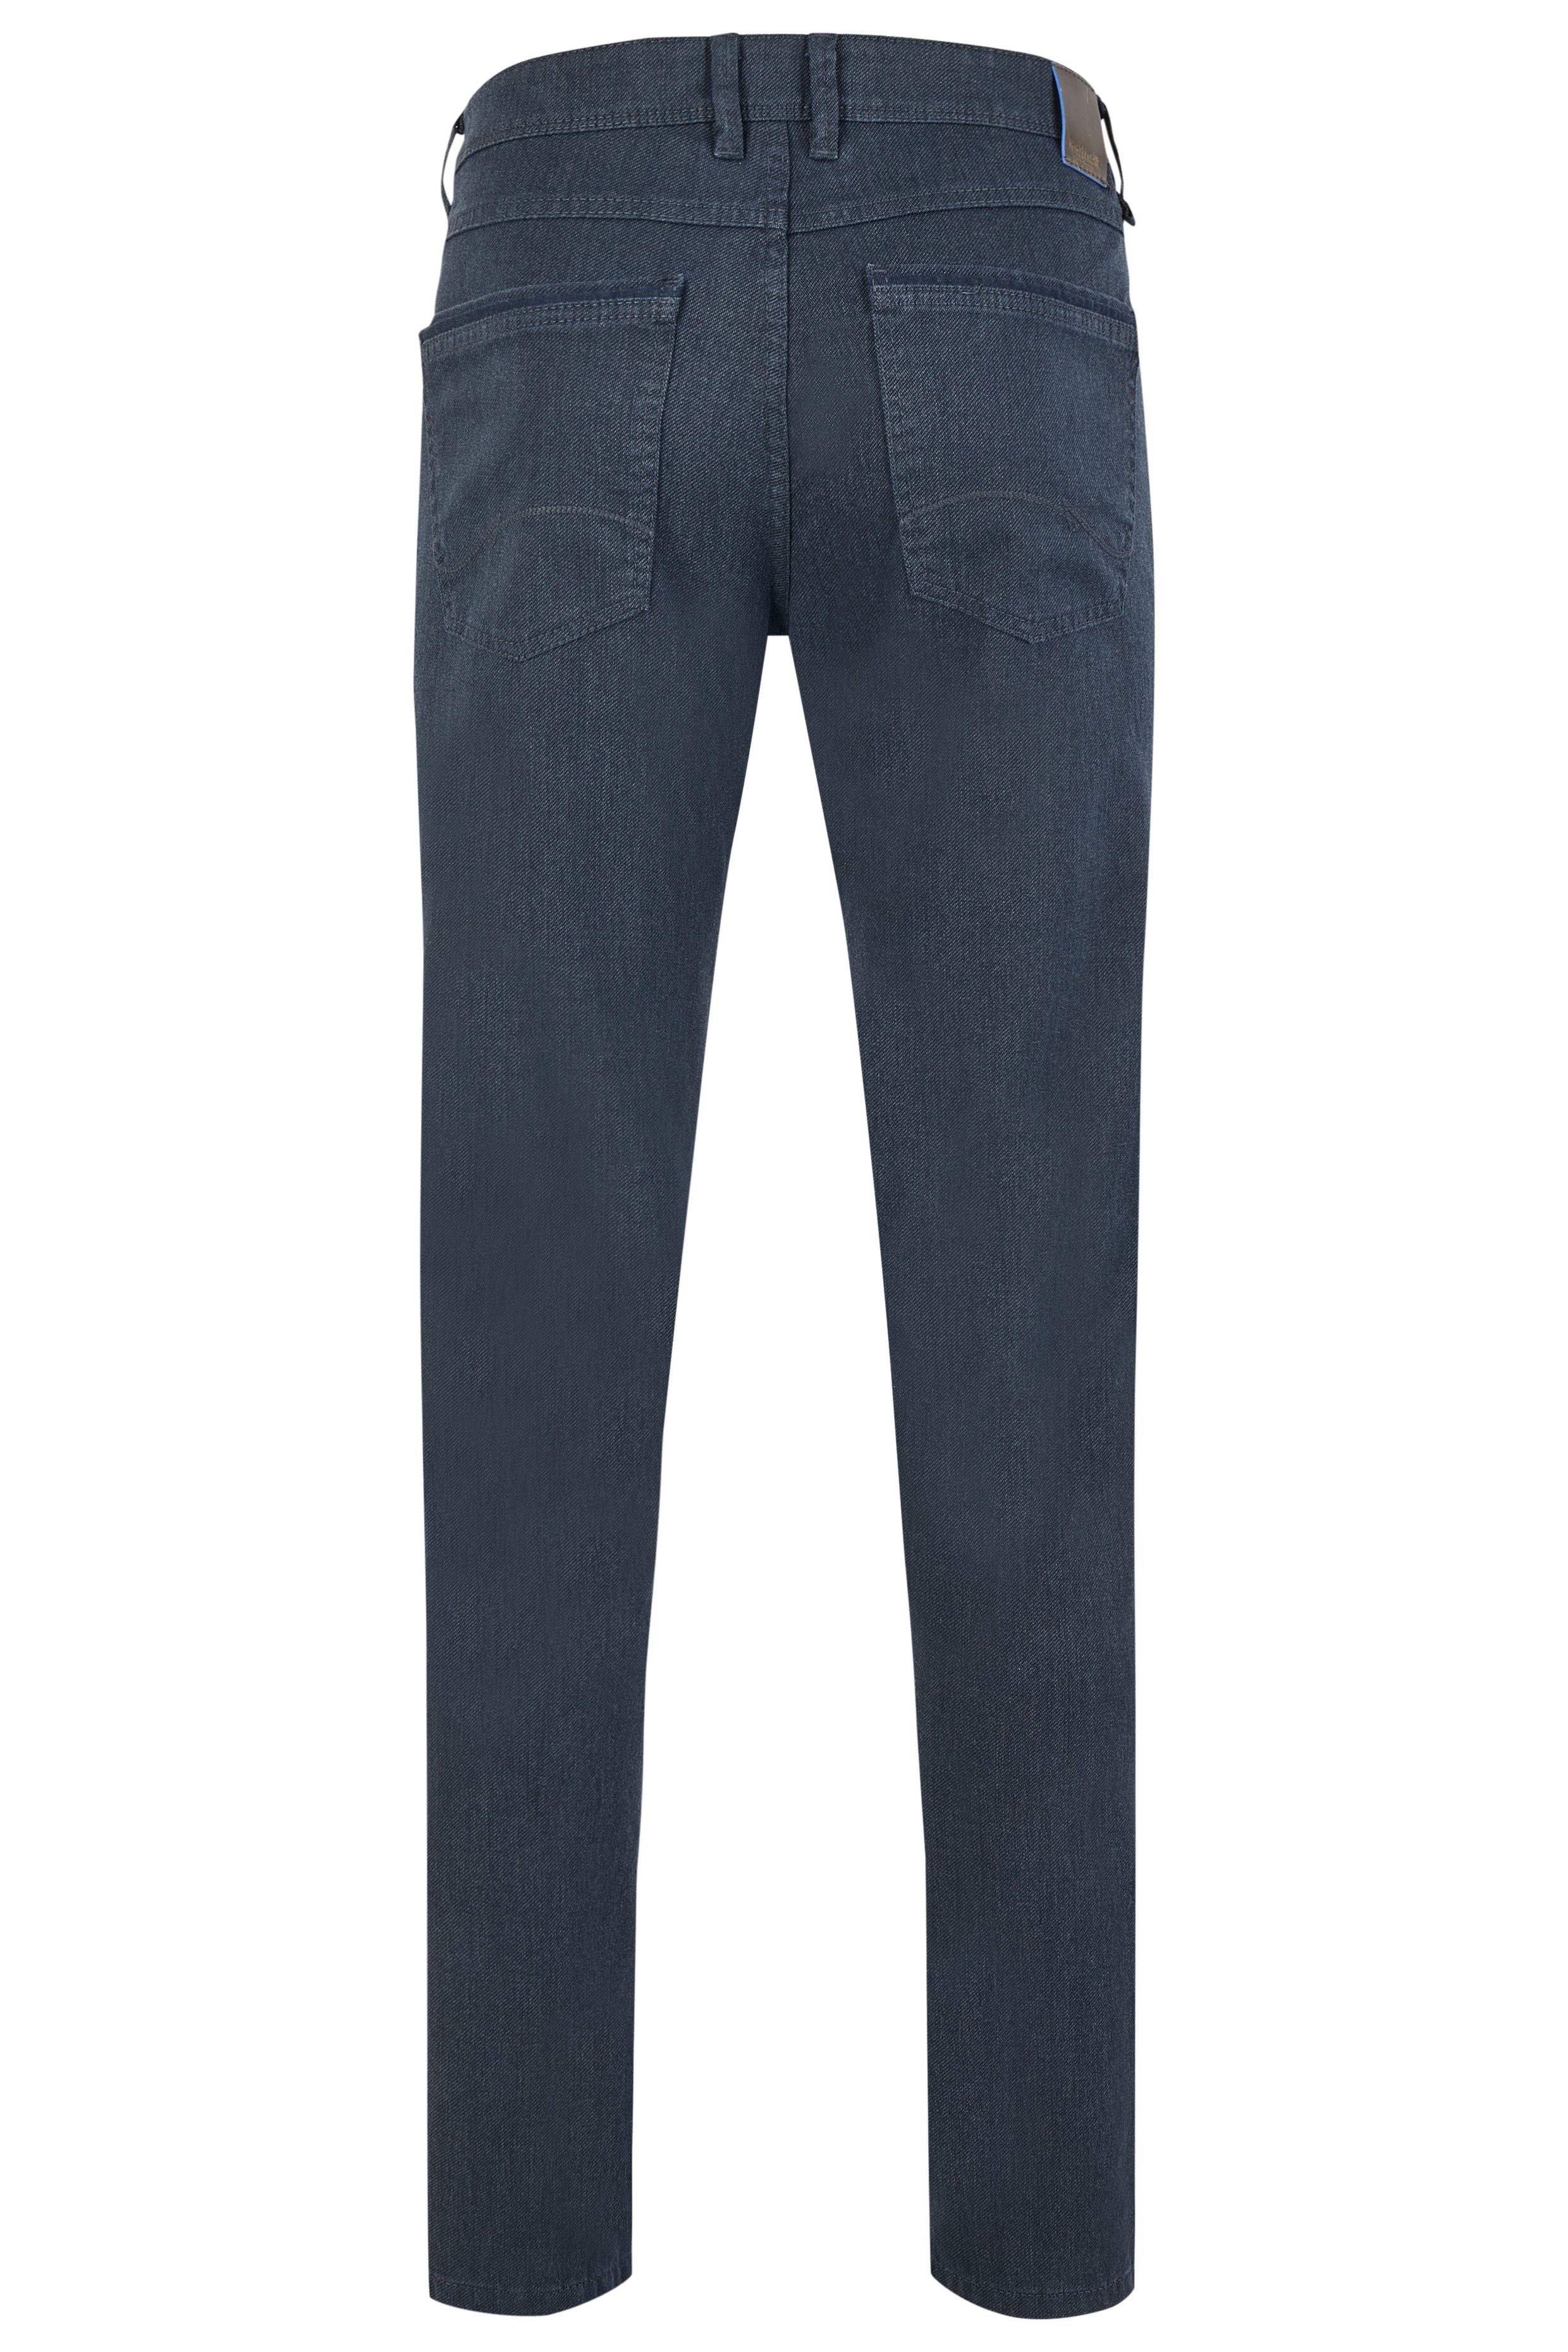 HATTRIC gabardine Hattric 5-Pocket-Jeans HUNTER LOOK WOOLEN 6255.42 - 688085 blue